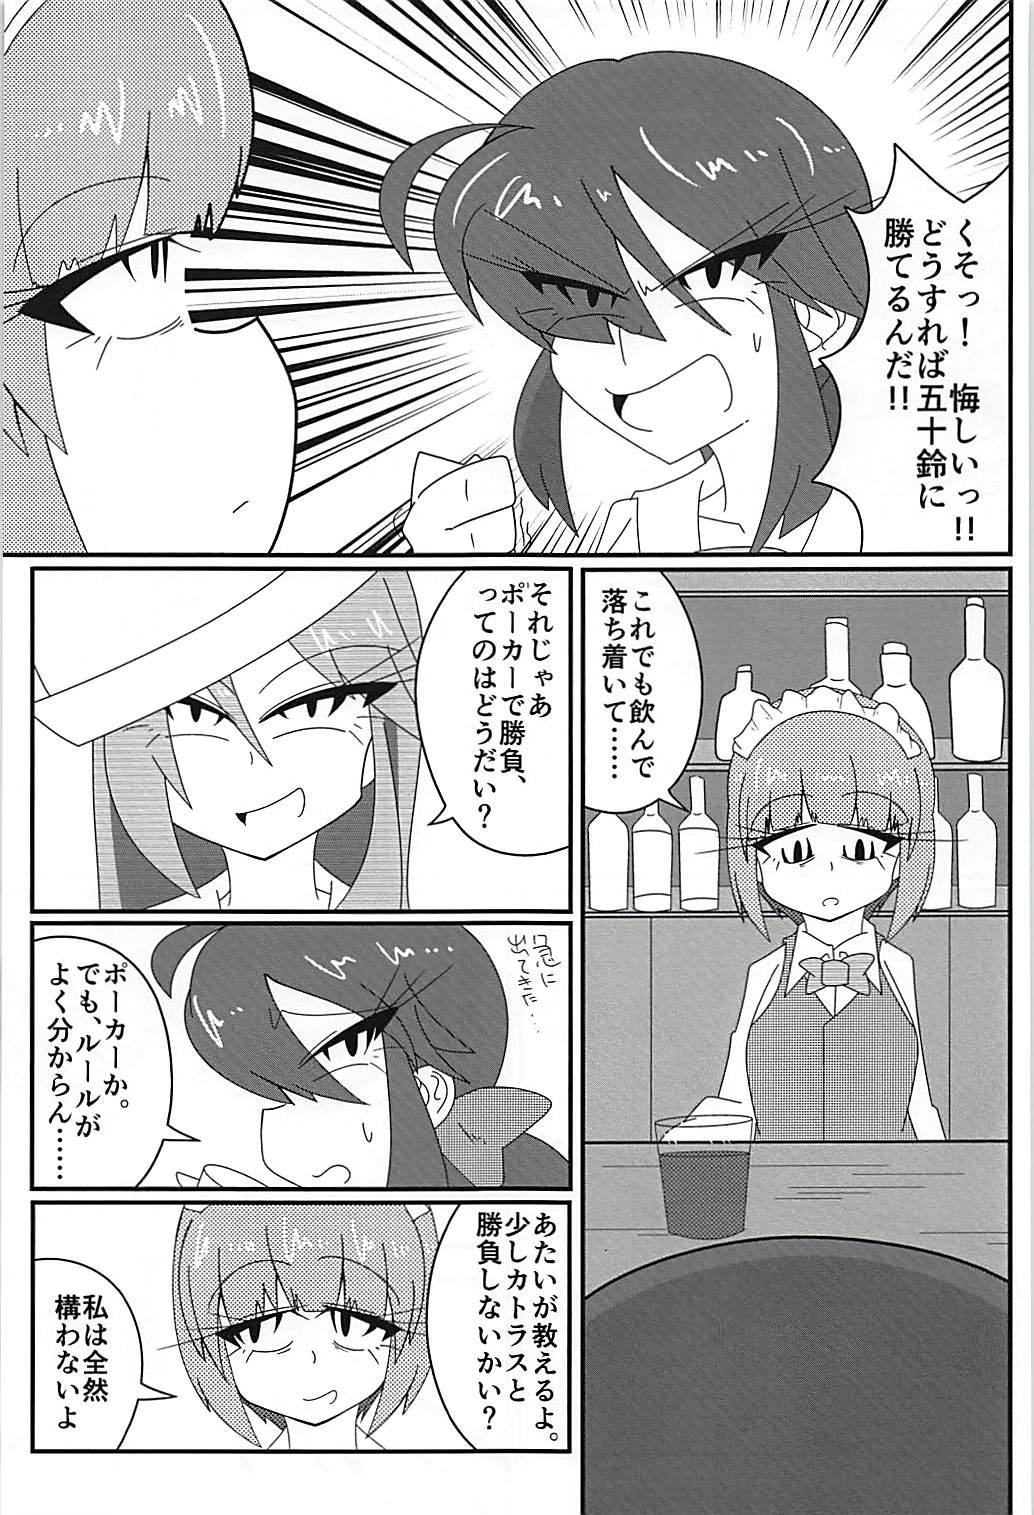 Masterbate Arakuremono no Leader, Haiboku! - Girls und panzer Job - Page 2